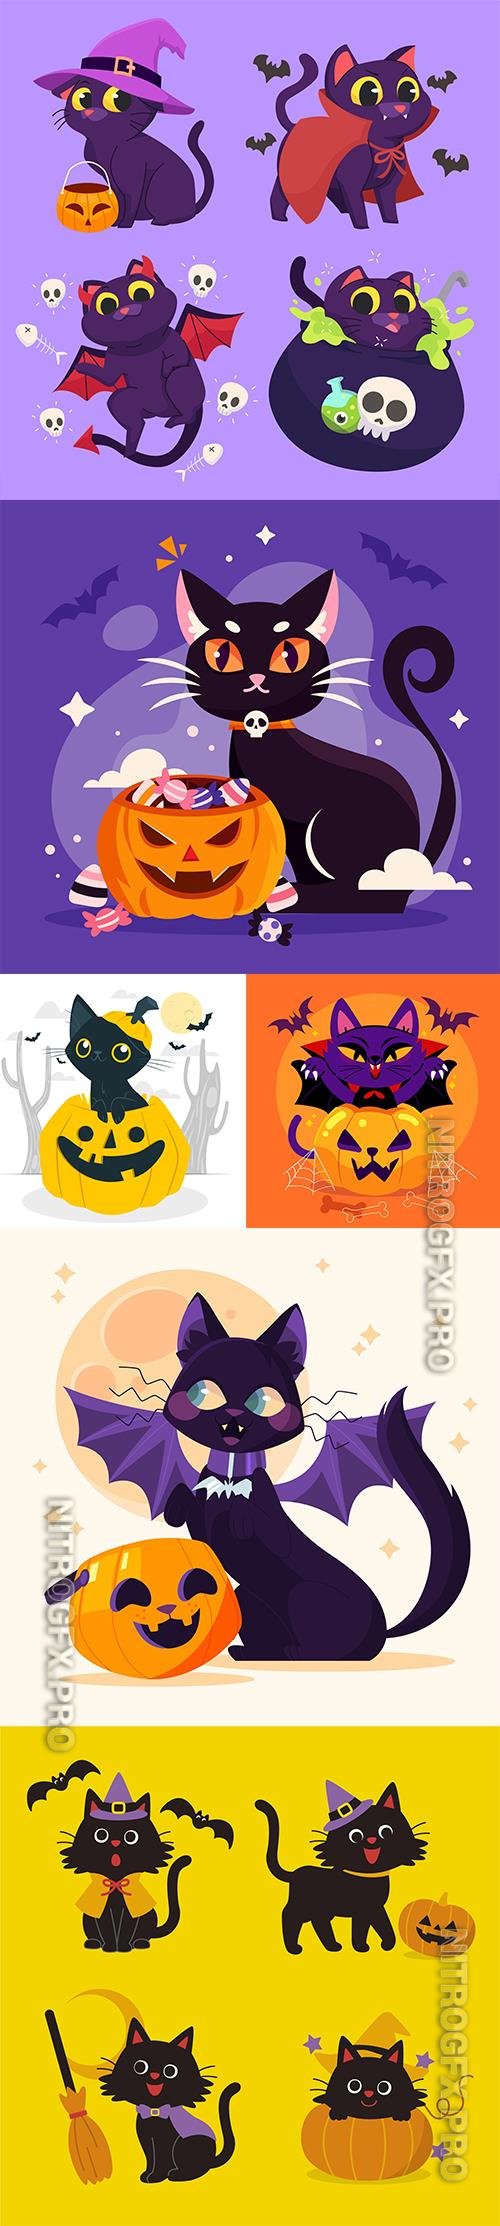 Hand-drawn Flat Halloween Cats Illustrations Vol 2